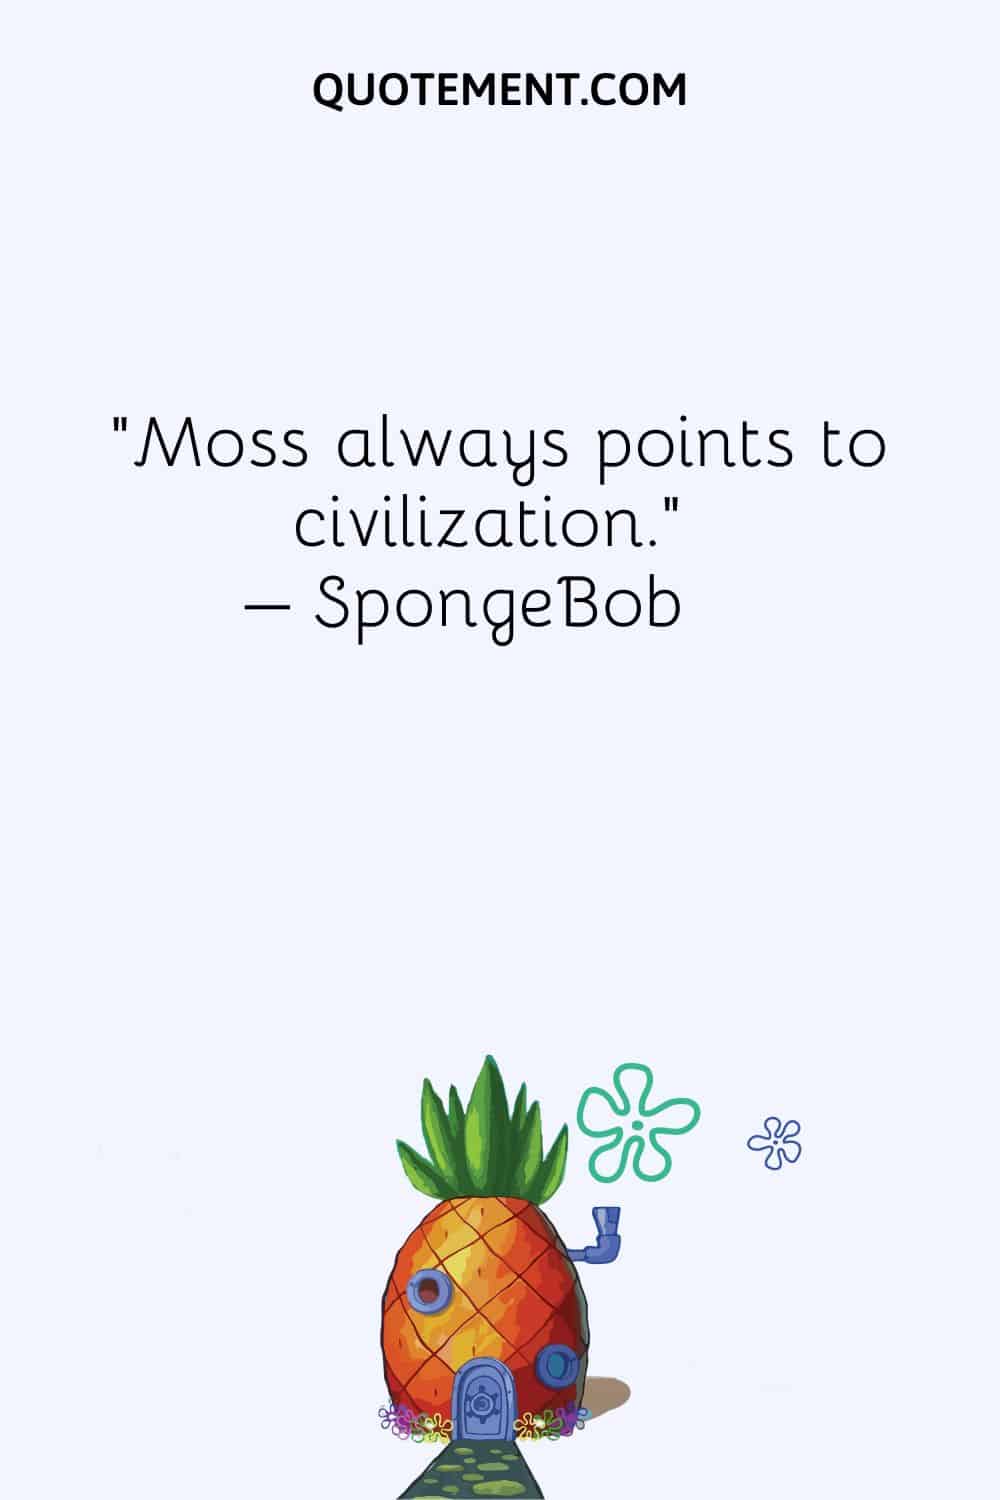 “Moss always points to civilization.” – SpongeBob